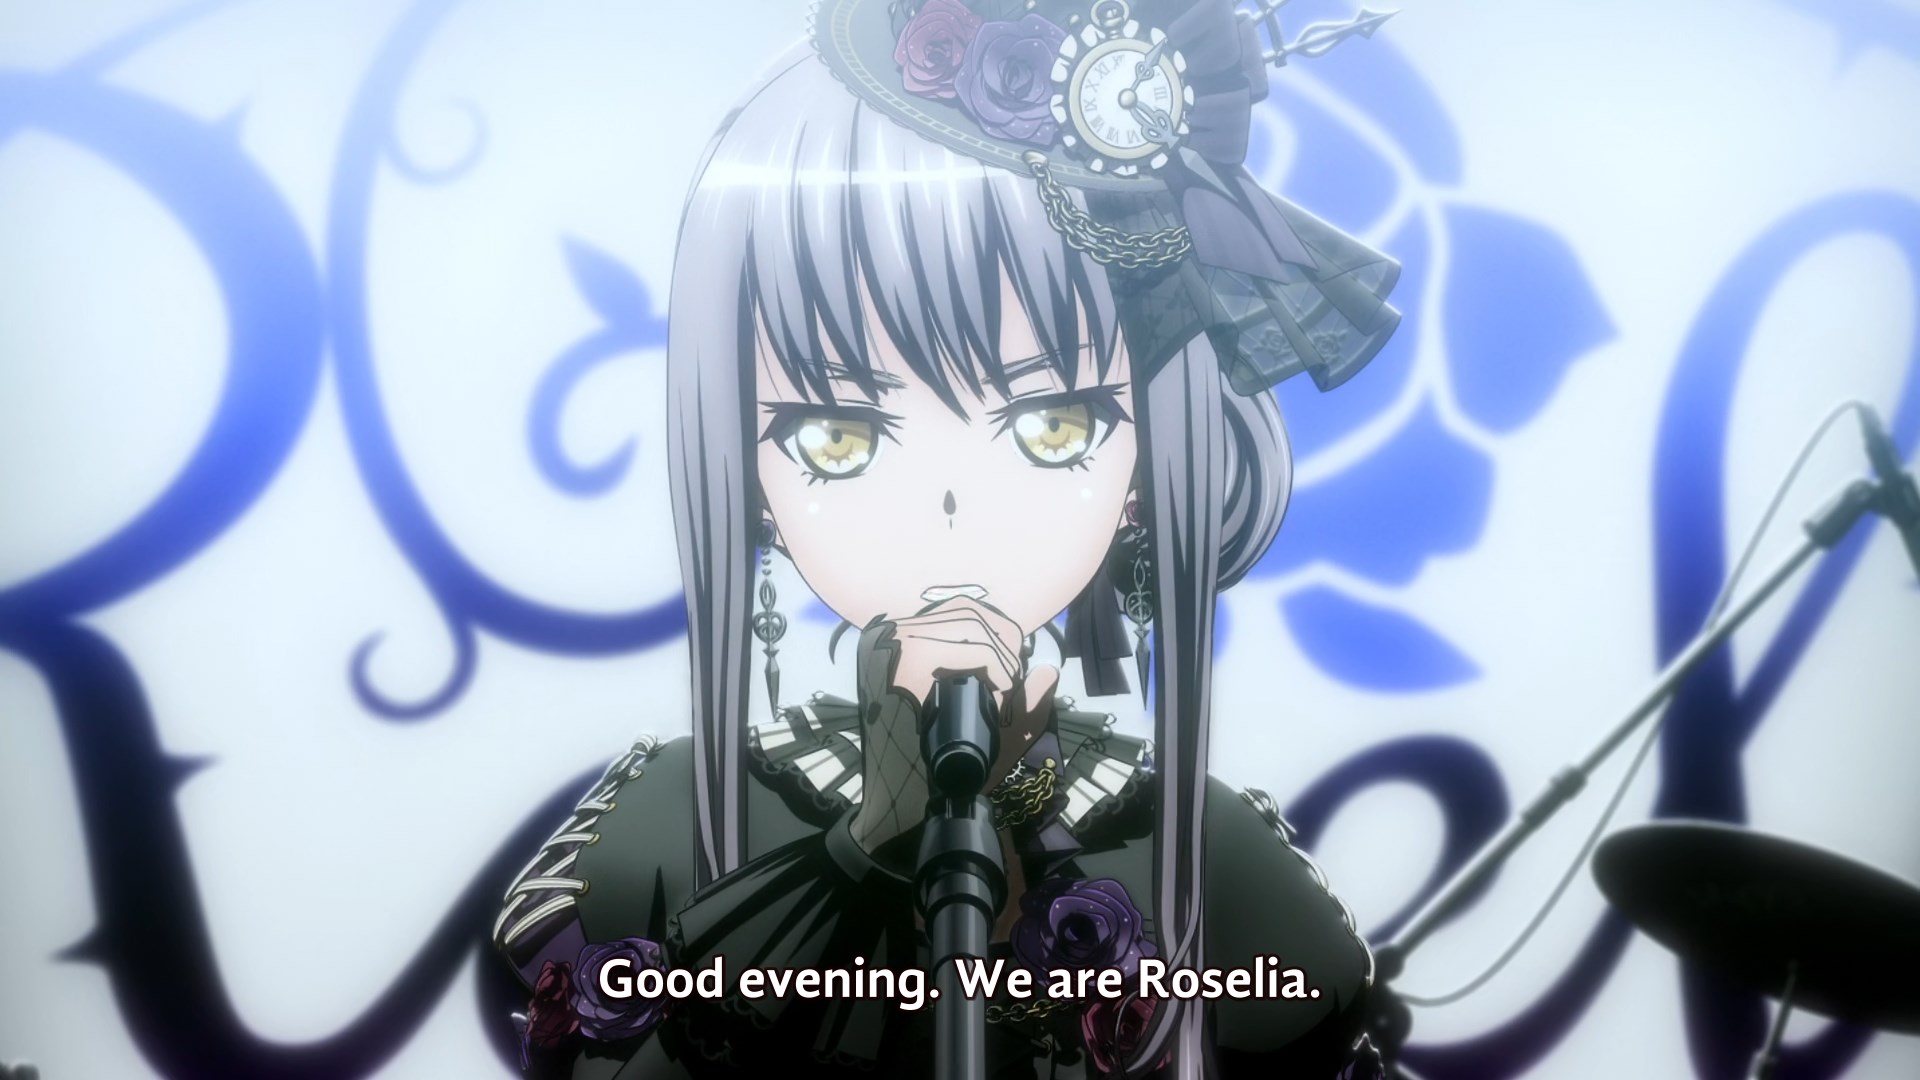 Yukina in close-up announcing Roselia